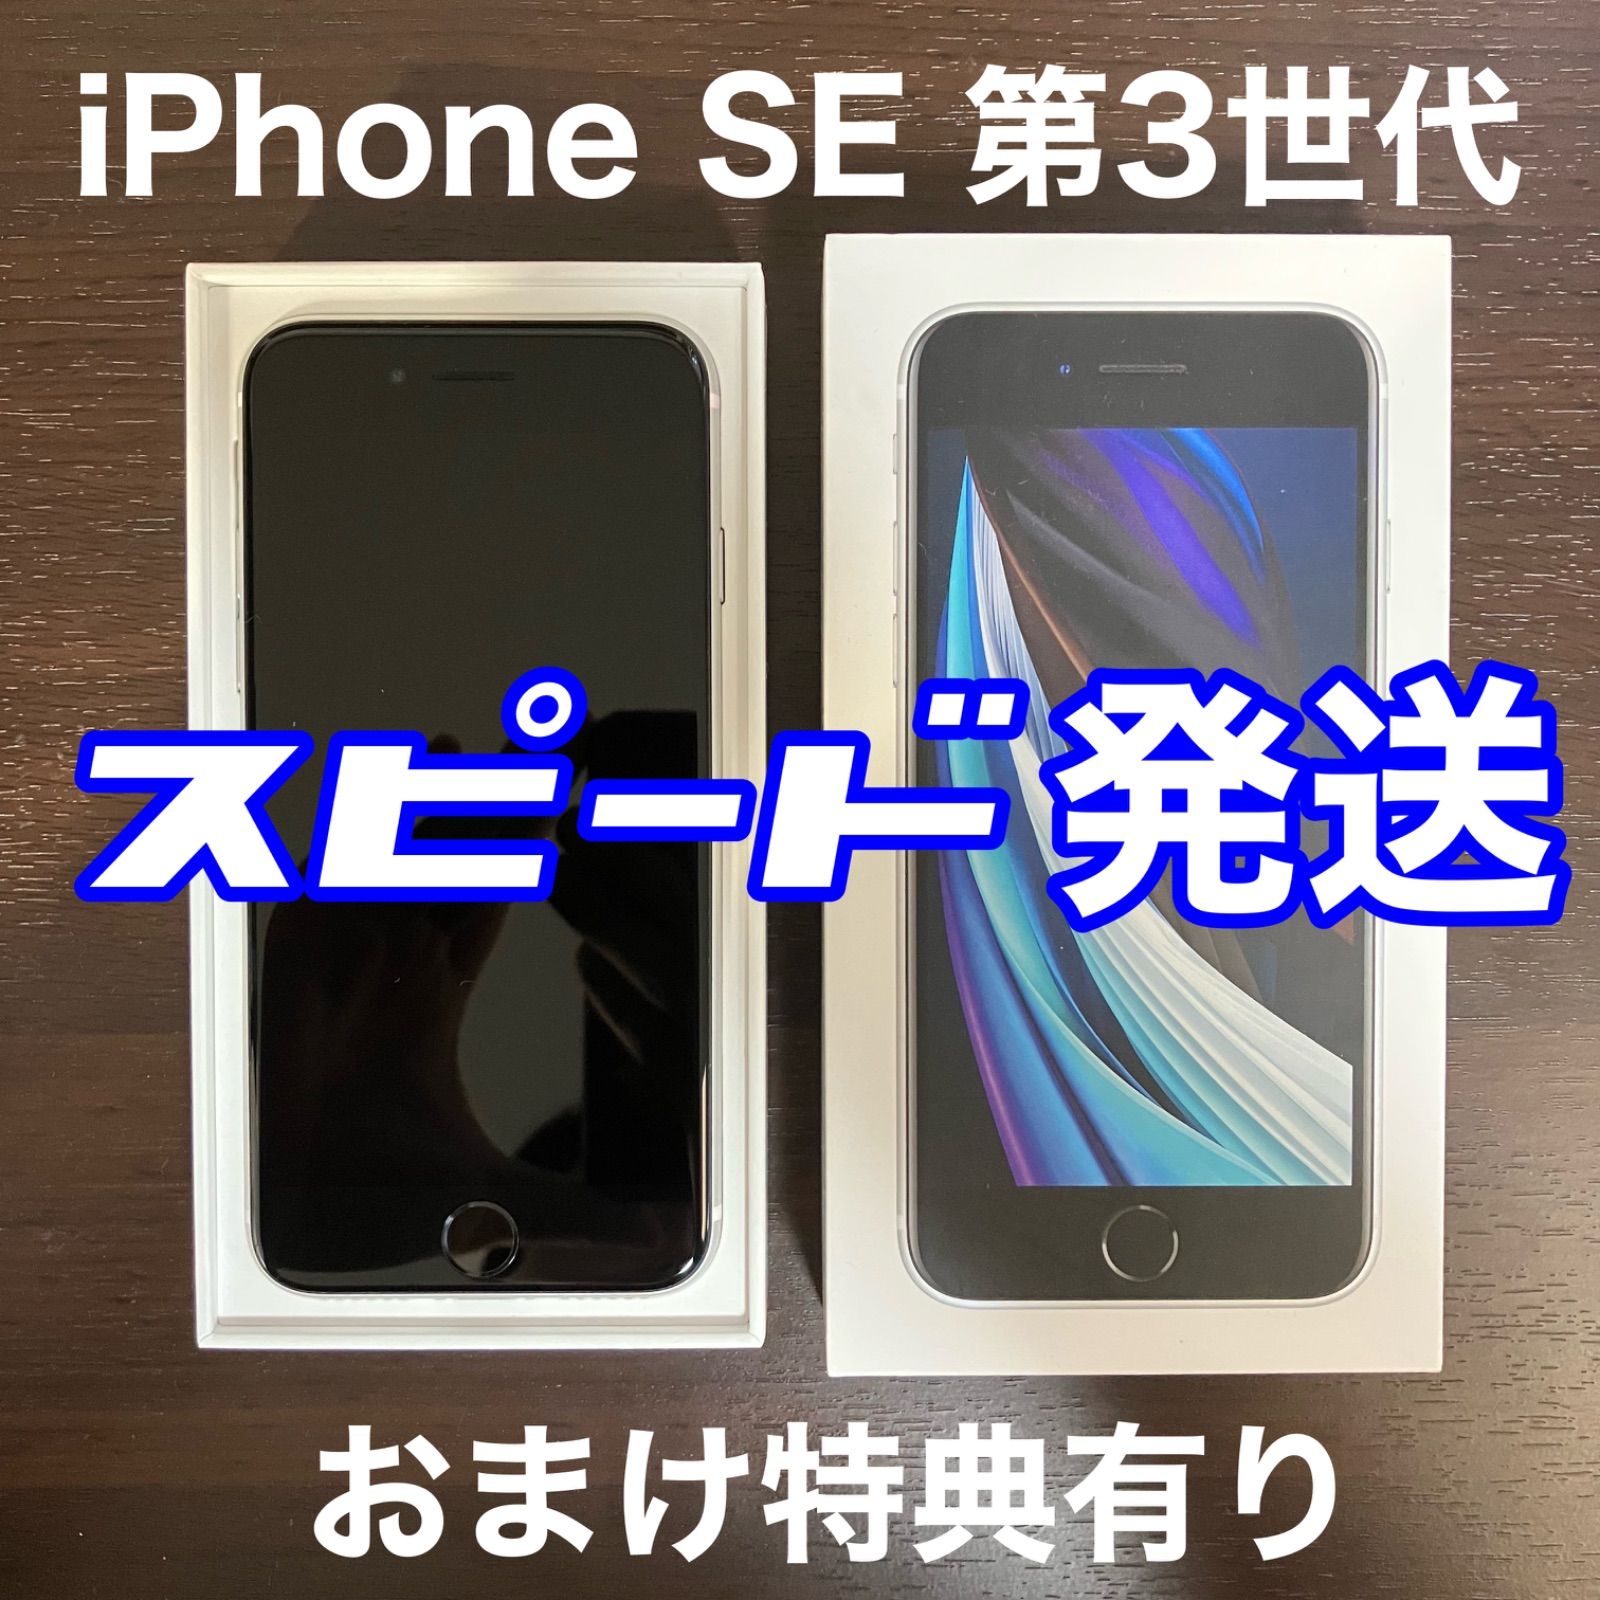 iPhone SE 第2世代 (SE2) ホワイト 64GB SIMフリー - 格安スマホ販売店